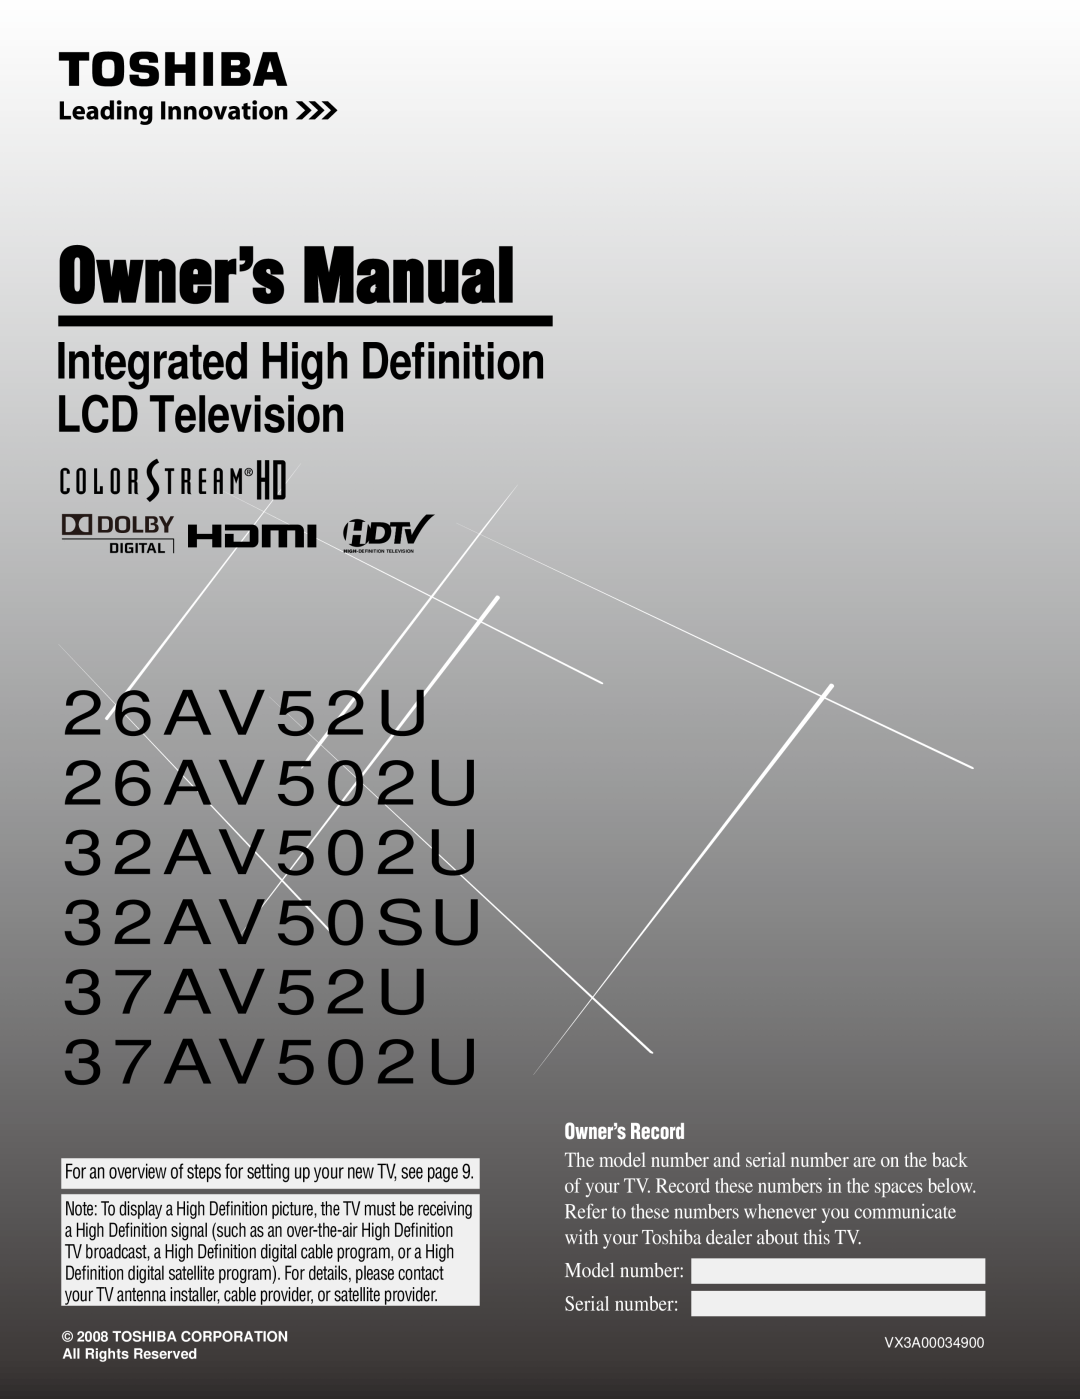 Toshiba 37AV52U manual Preliminary, Advantage, 720p HD LCD TV with CineSpeed 